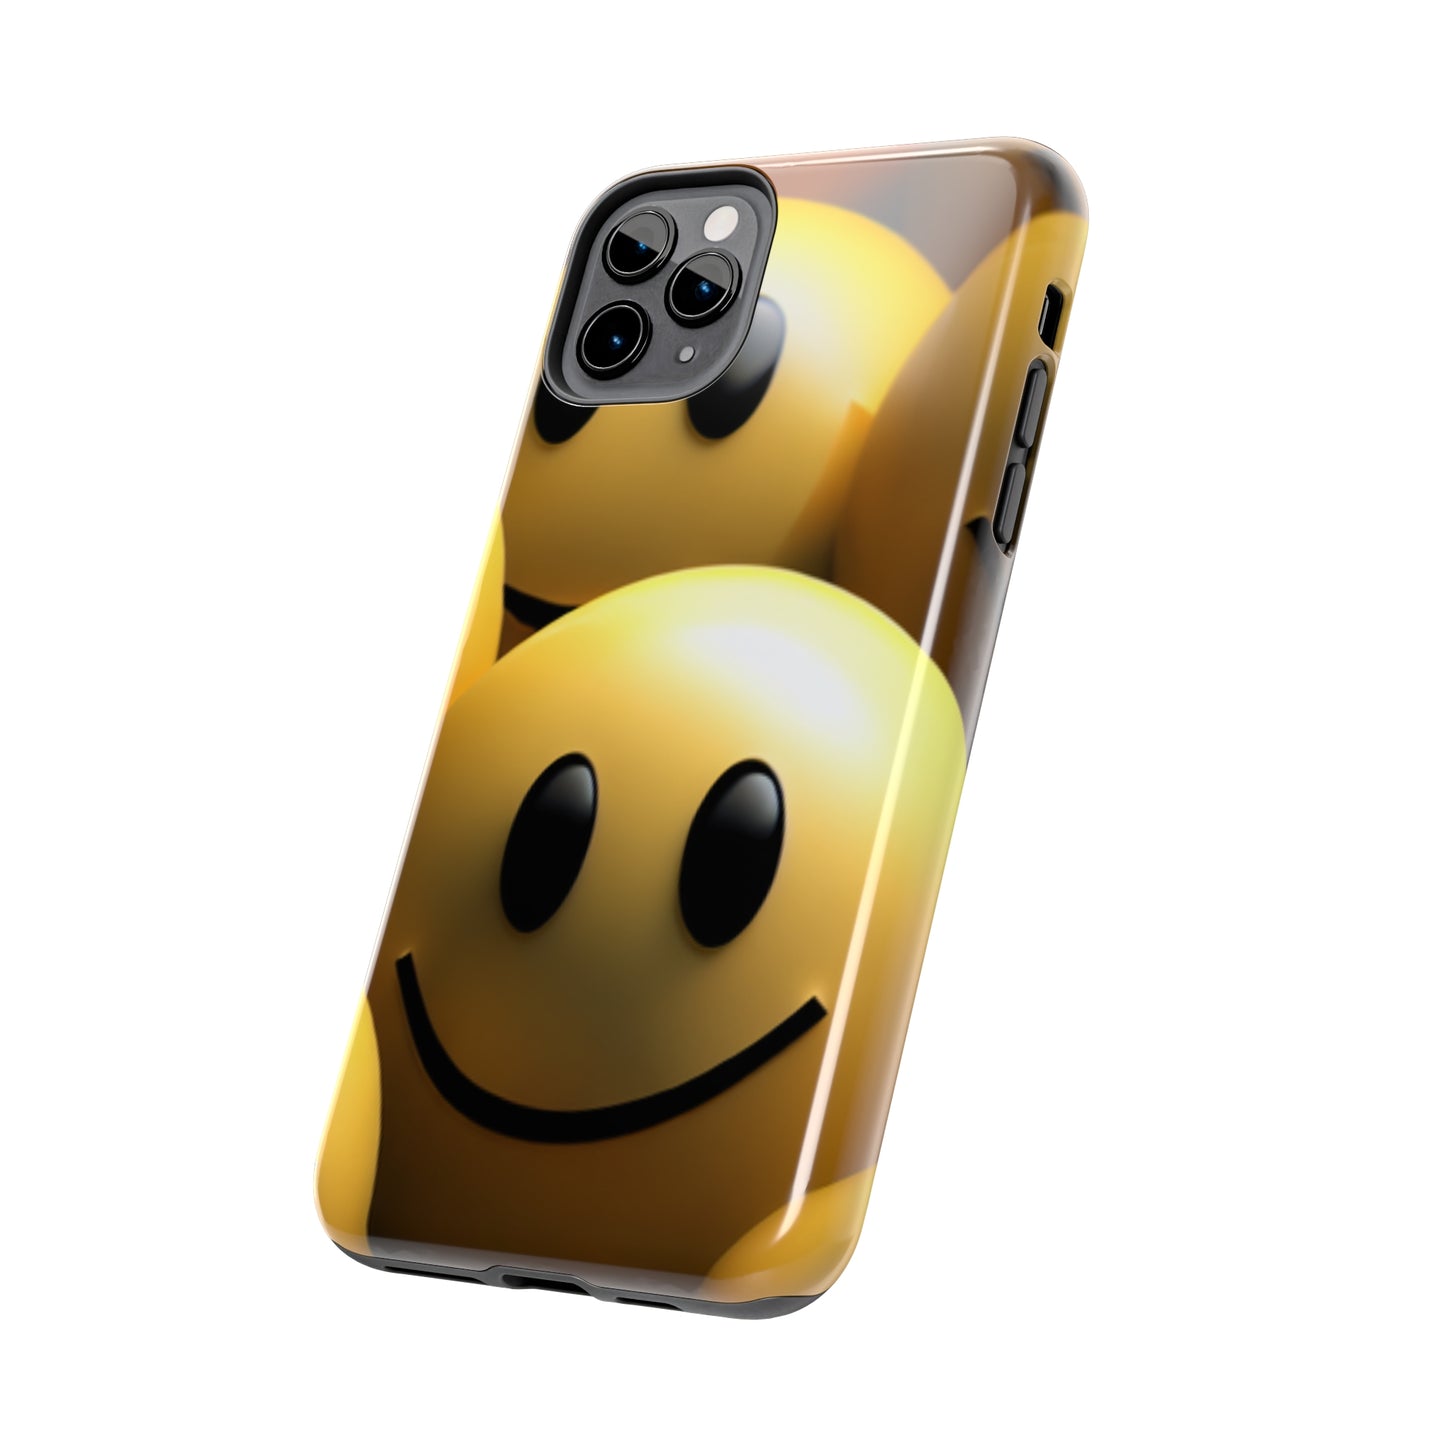 Smiley Phone Case